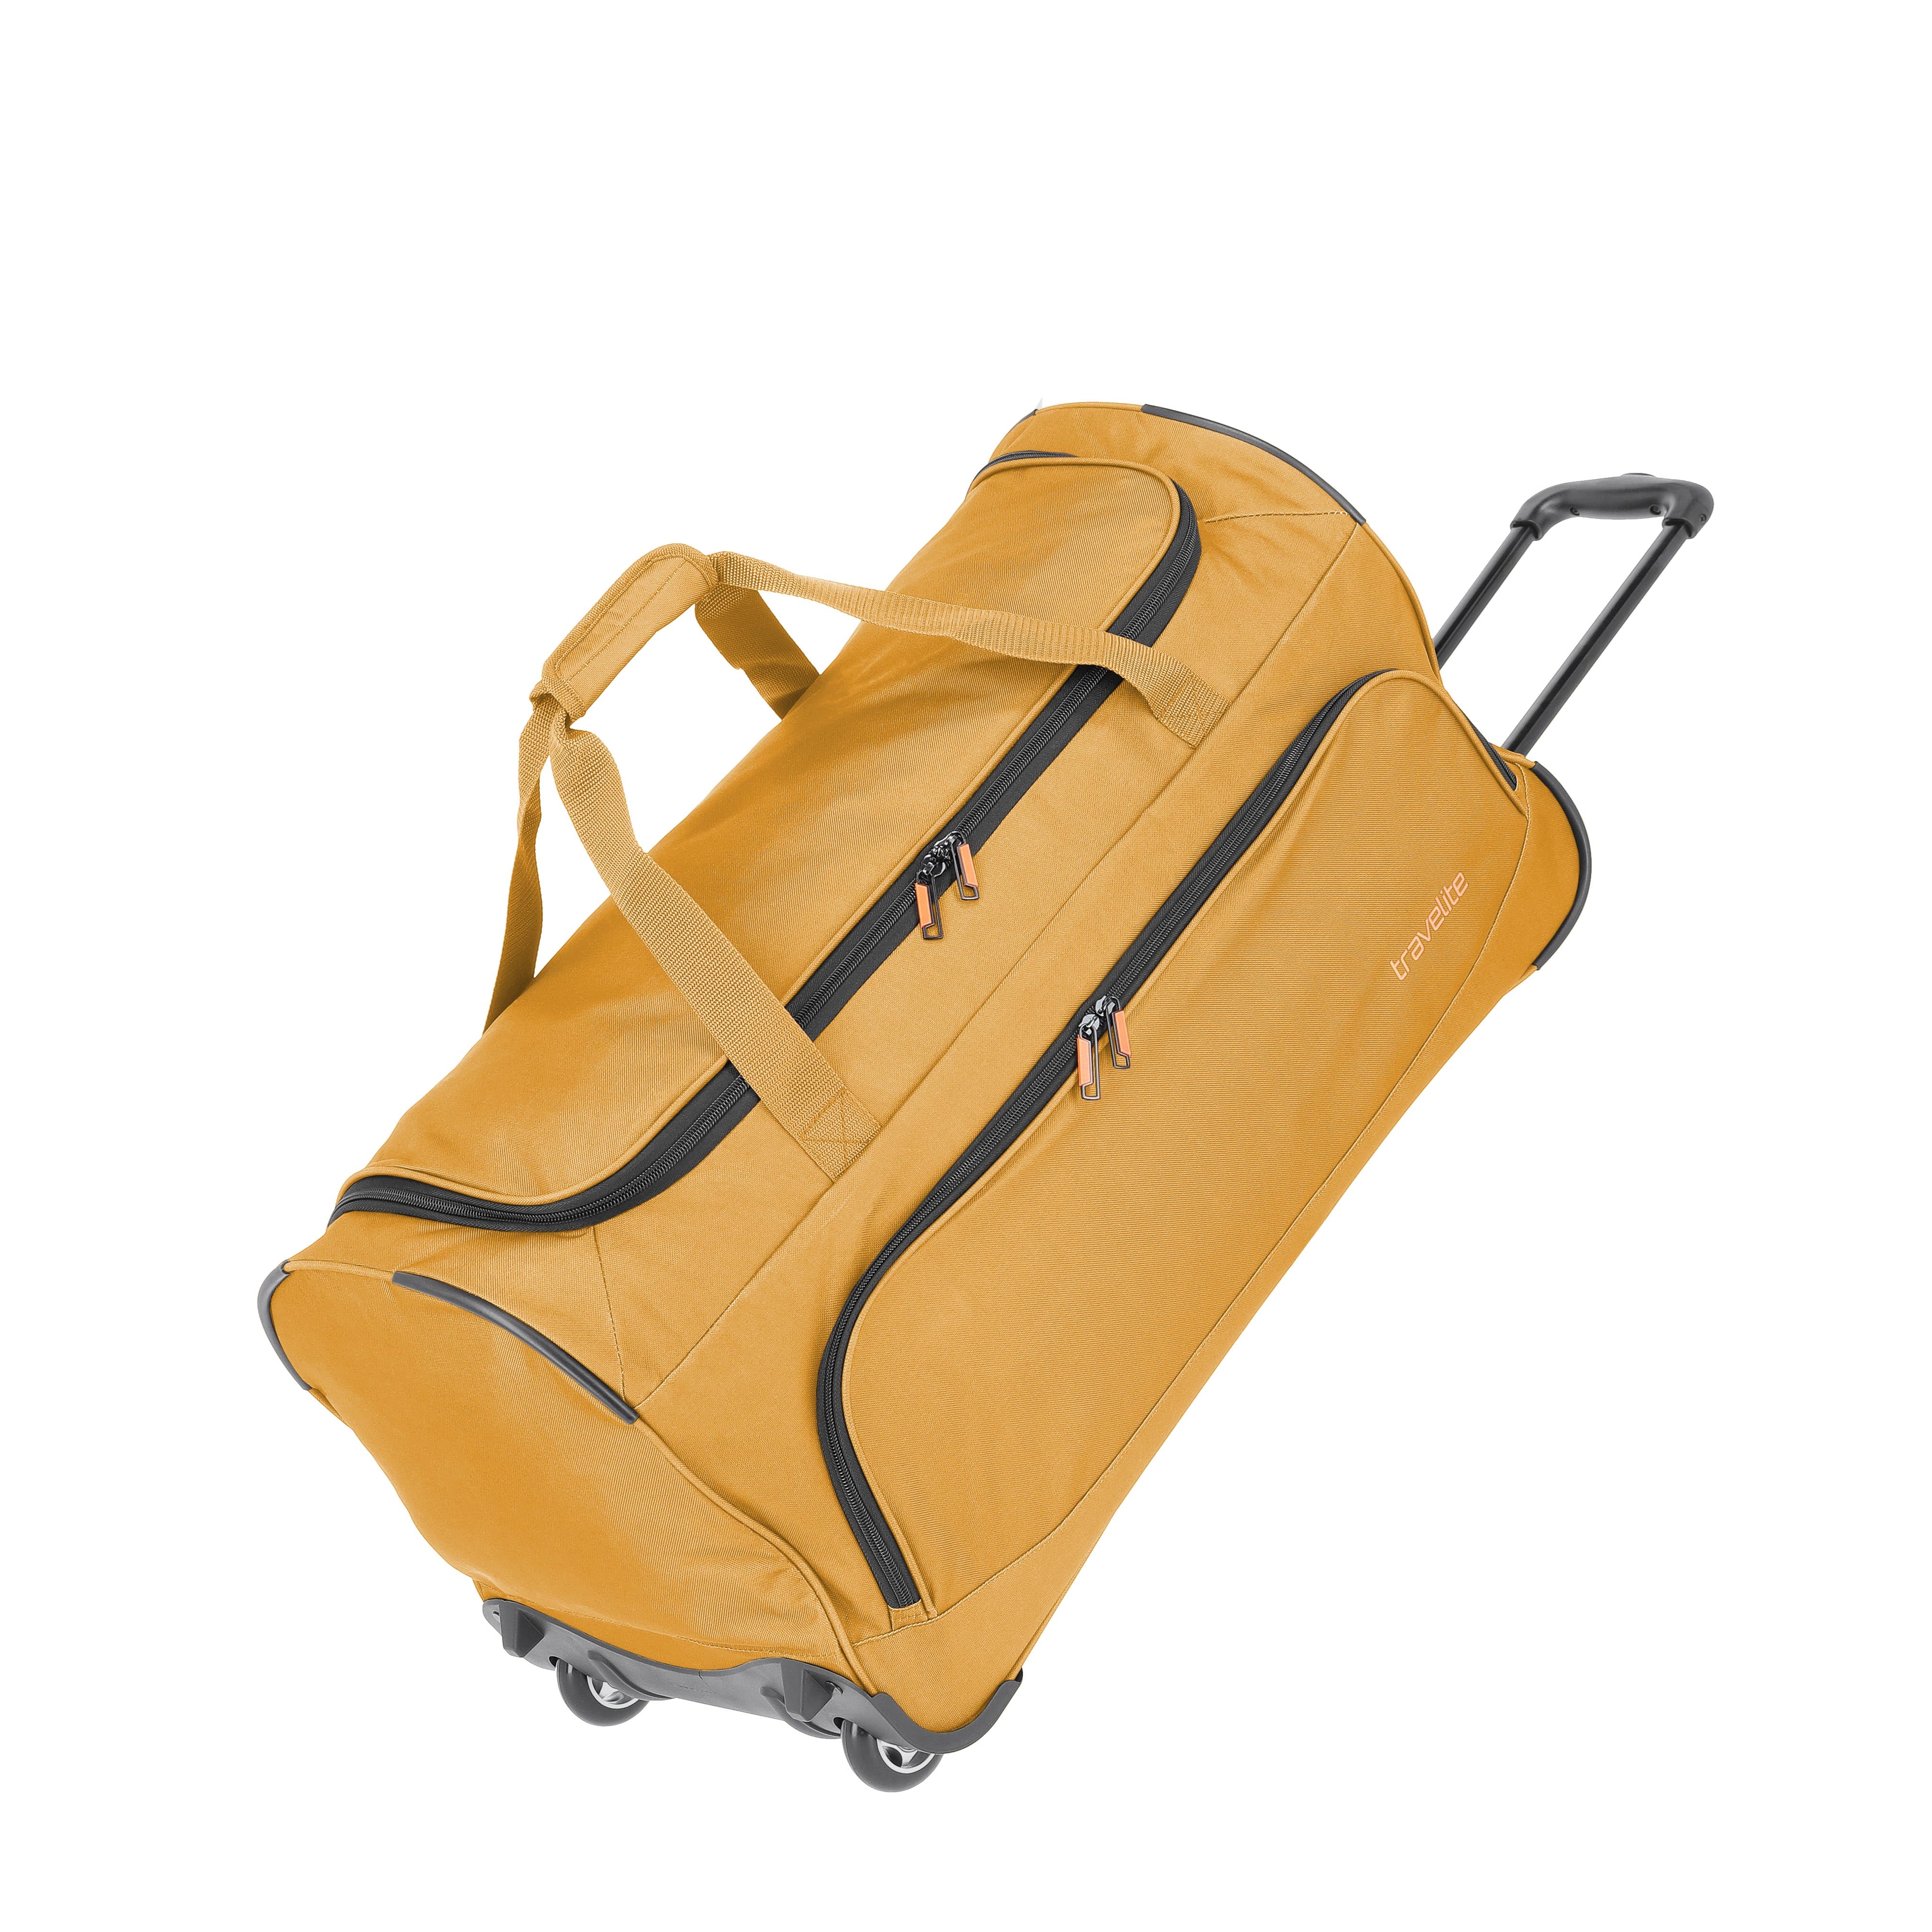 Basics Fresh Trolley Travel Bag yellow